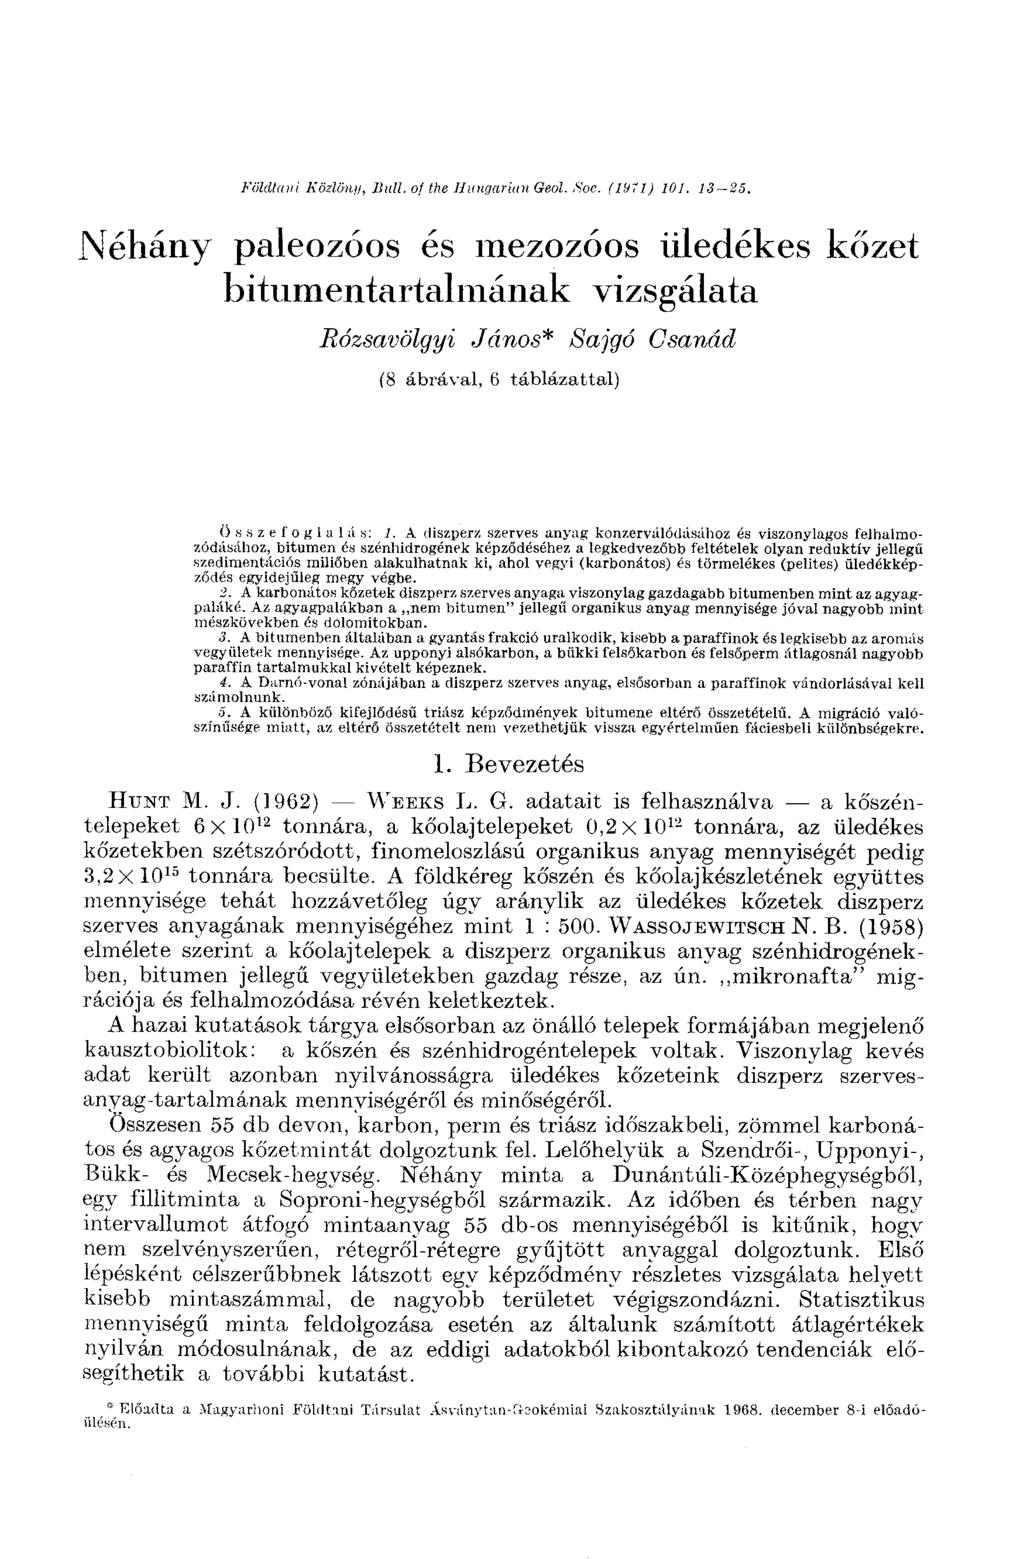 Földtani Ködönii, Bull, of the Hungarian Geol. Soc. (1971) 101. 13-25.